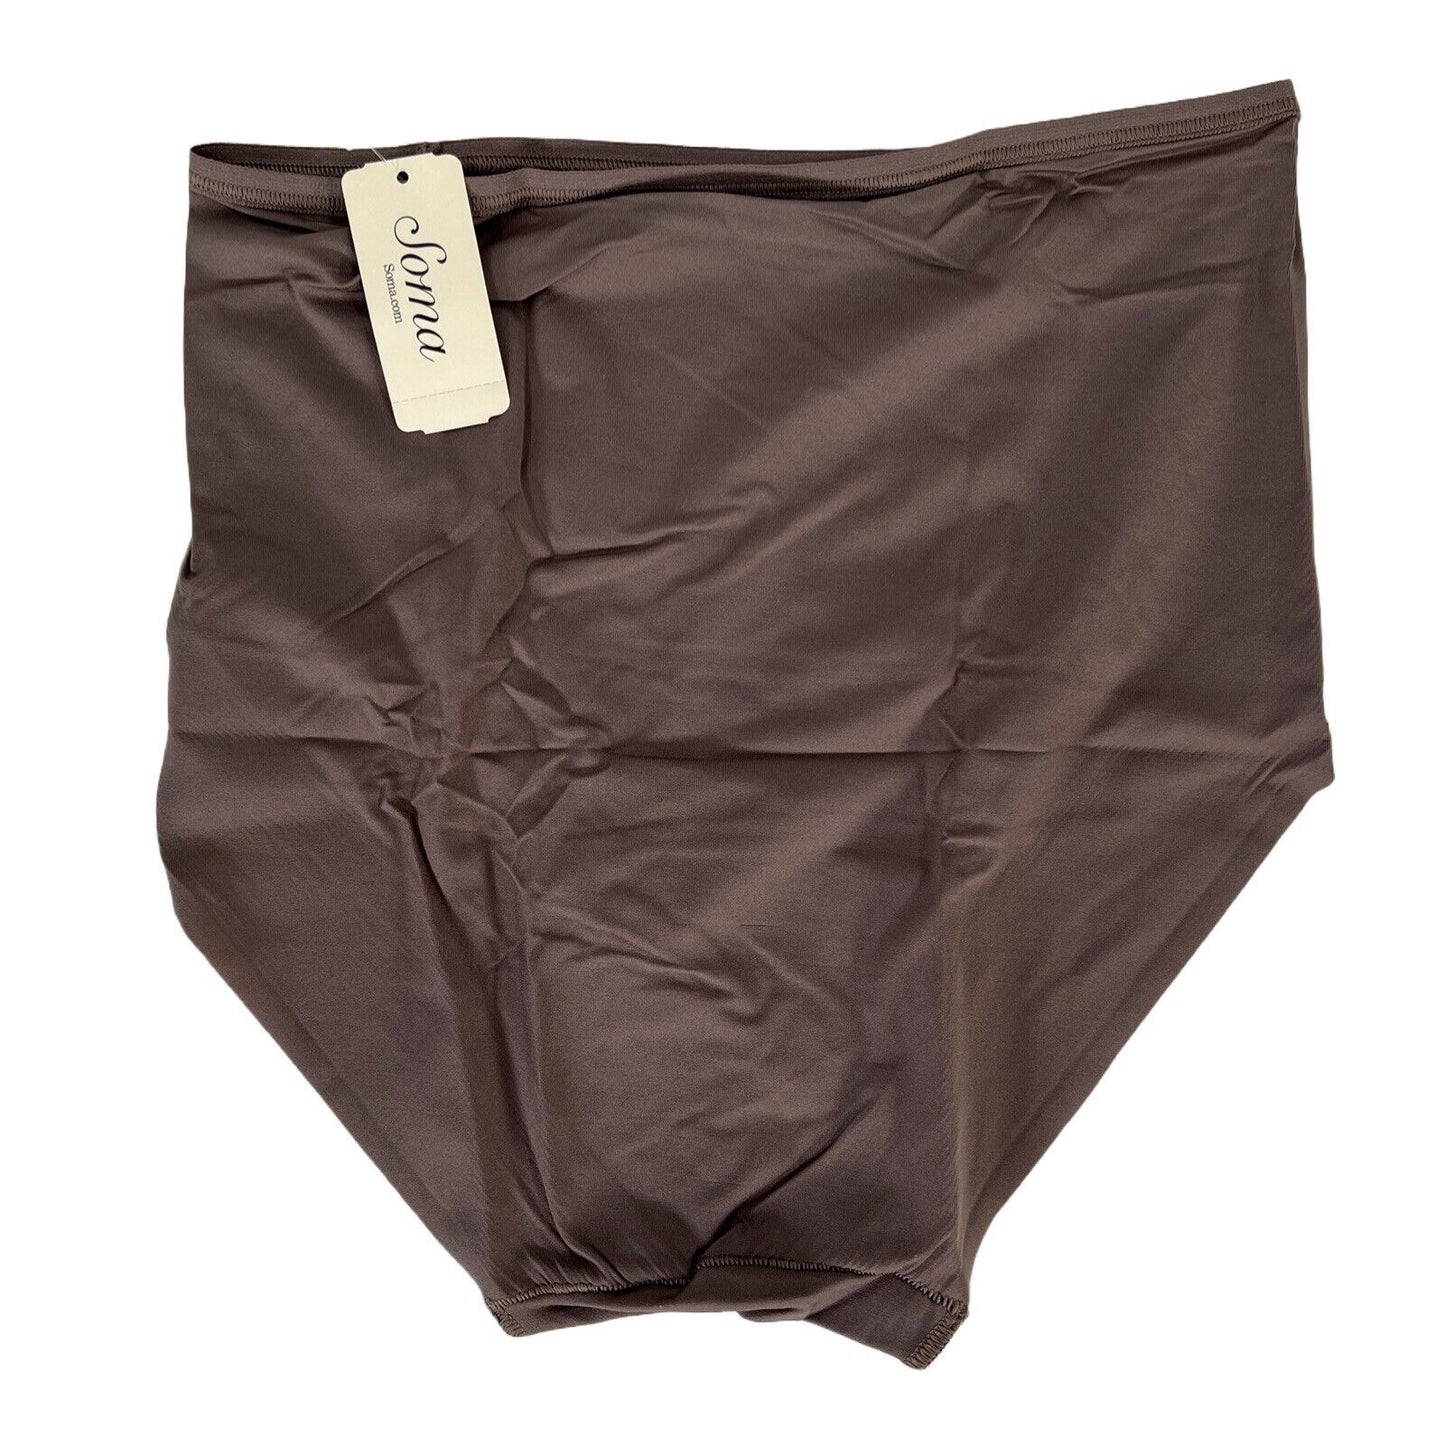 NEW Soma Women's Brown Vanishing Edge Micro Modern Brief Underwear - L